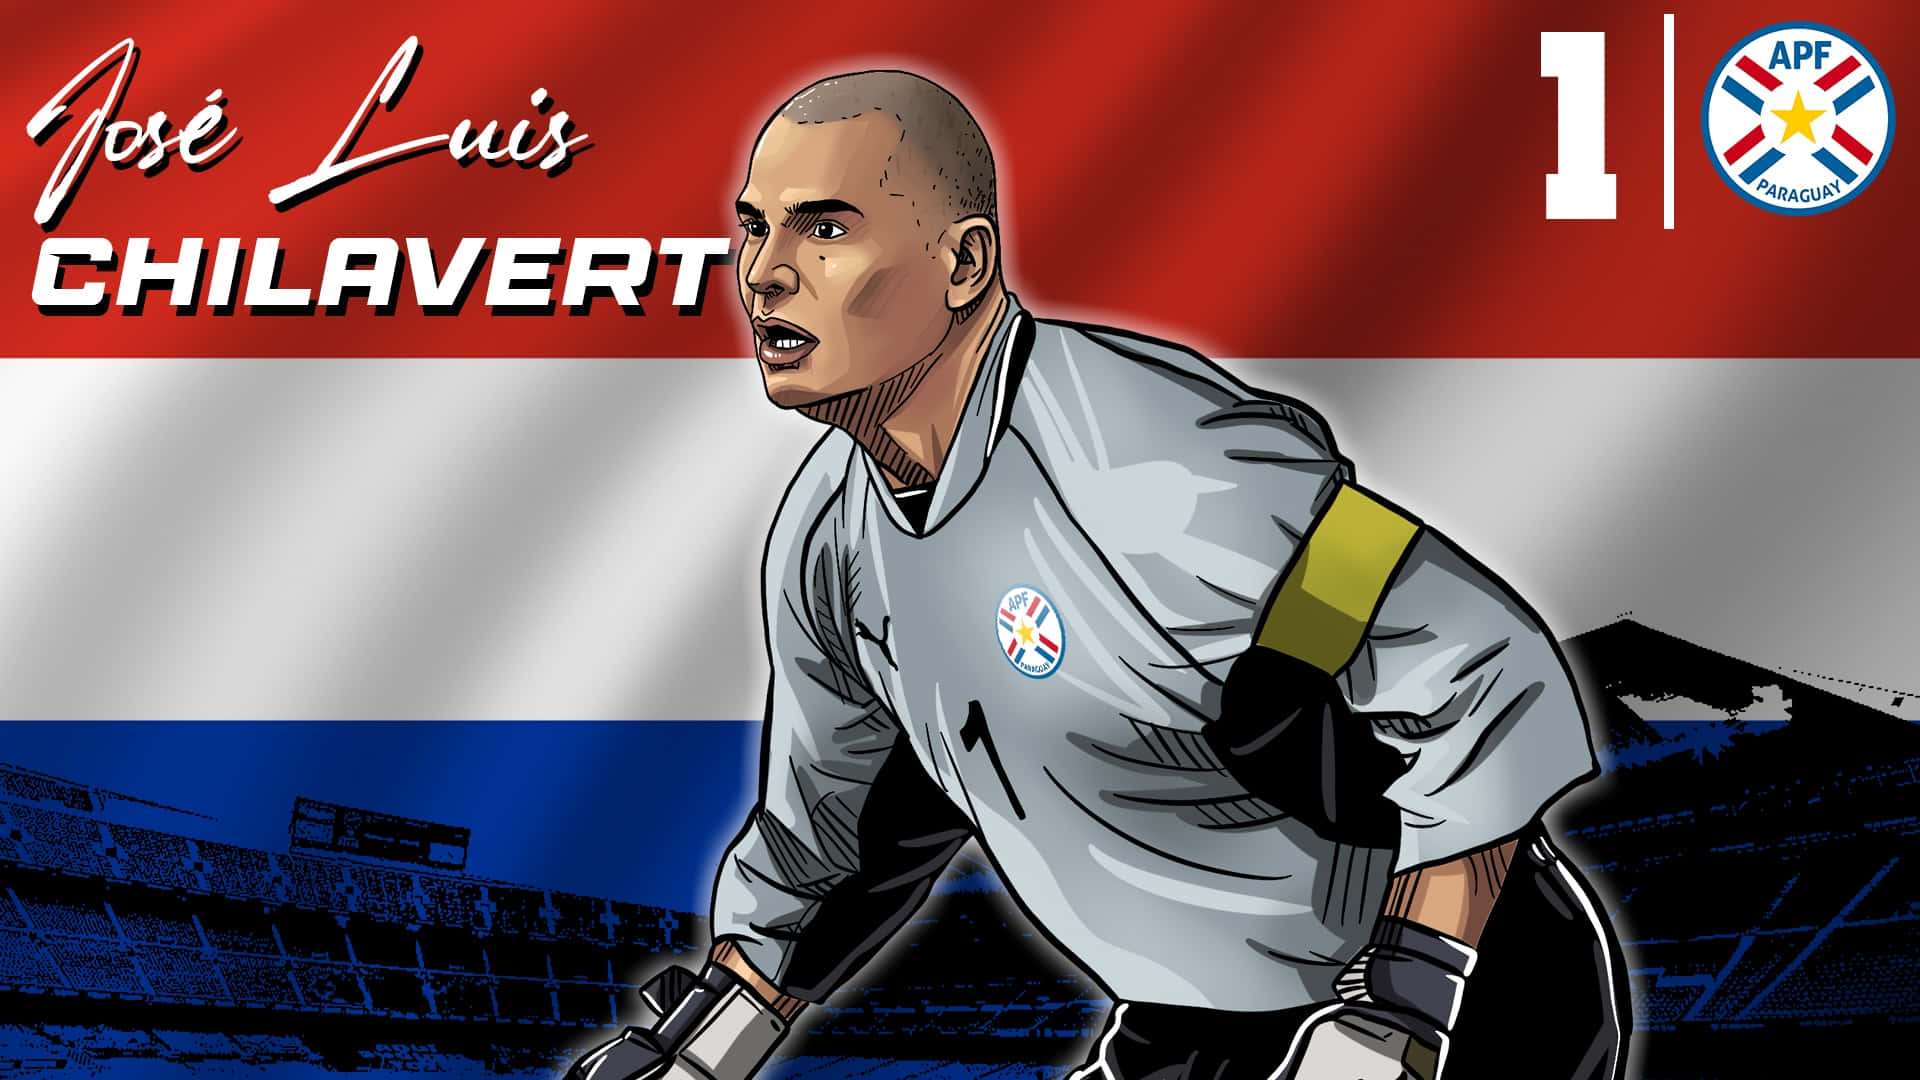 Paraguayischerfußballspieler Jose Luis Chilavert Digitale Kunst Wallpaper